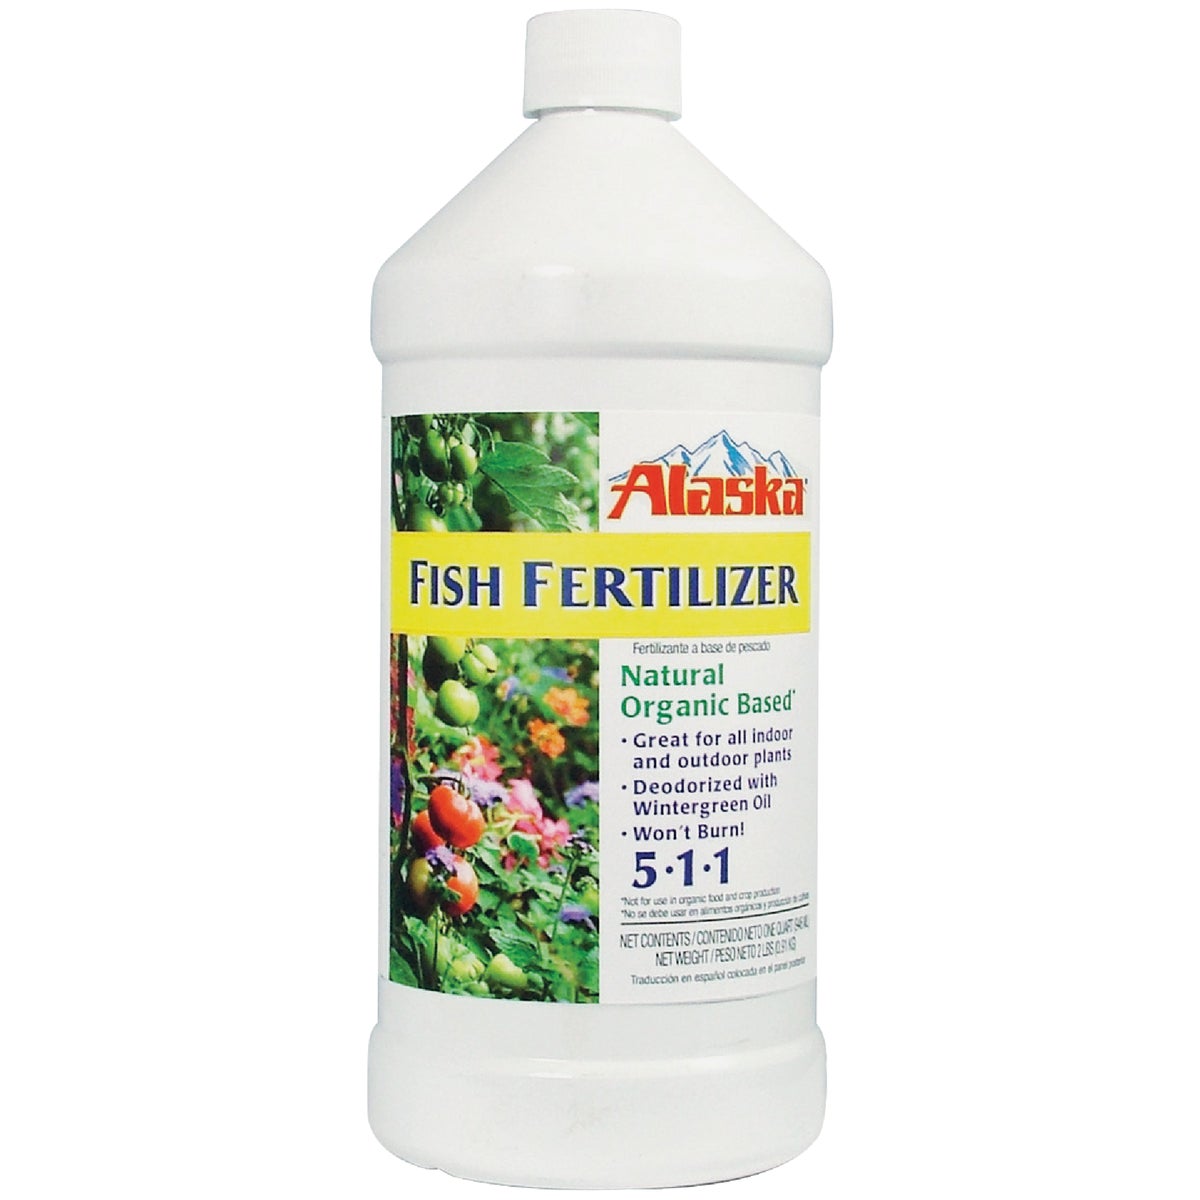 Item 768790, Natural, organic based., easy-to-use, liquid formula plant food.